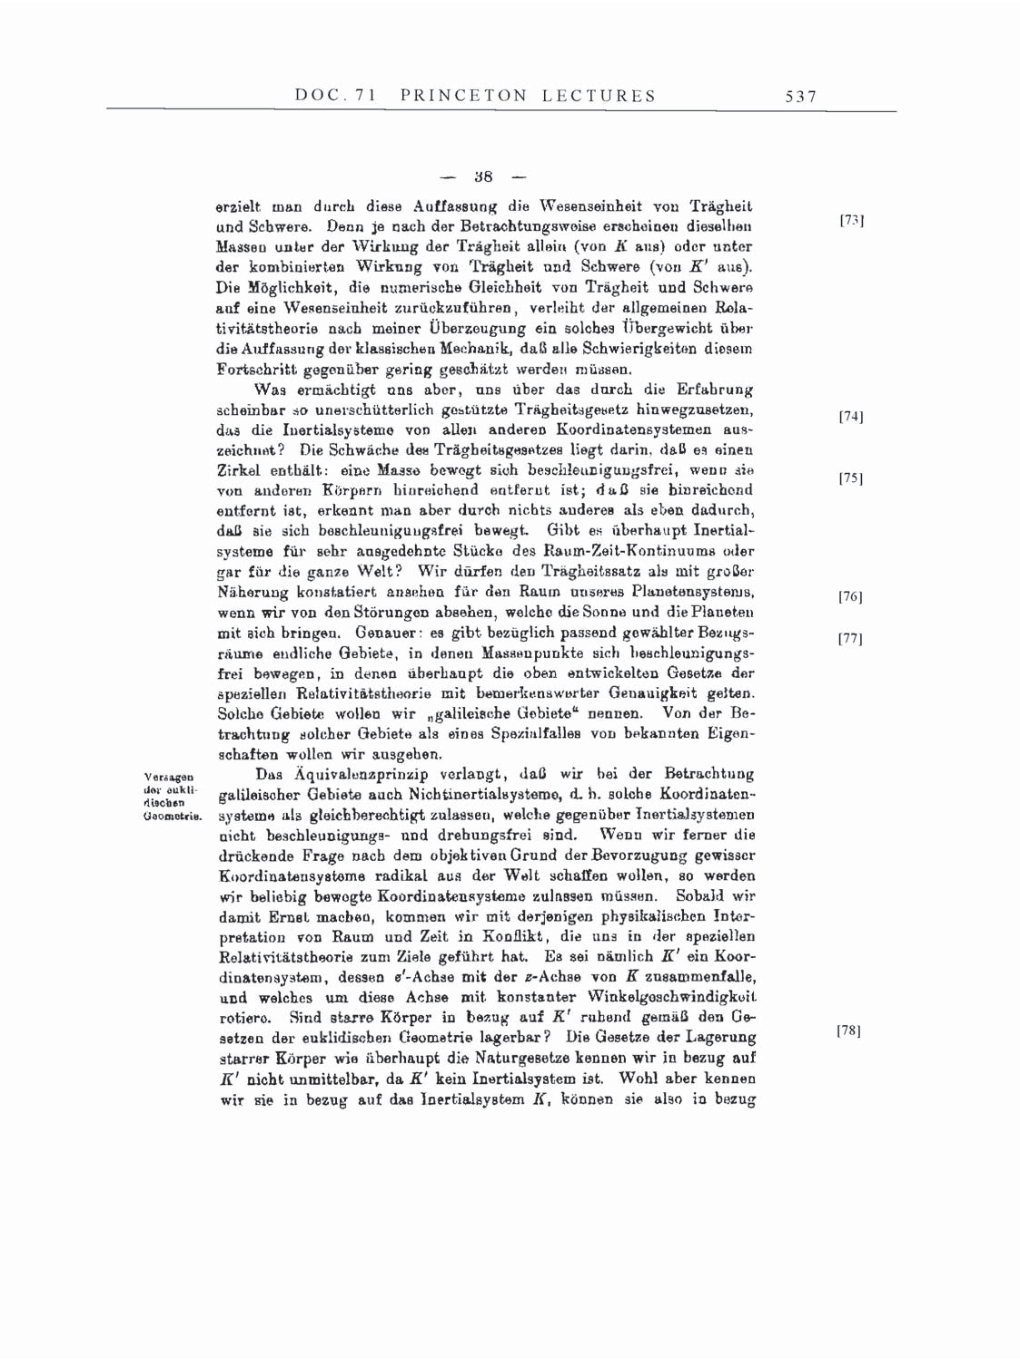 Volume 7: The Berlin Years: Writings, 1918-1921 page 537